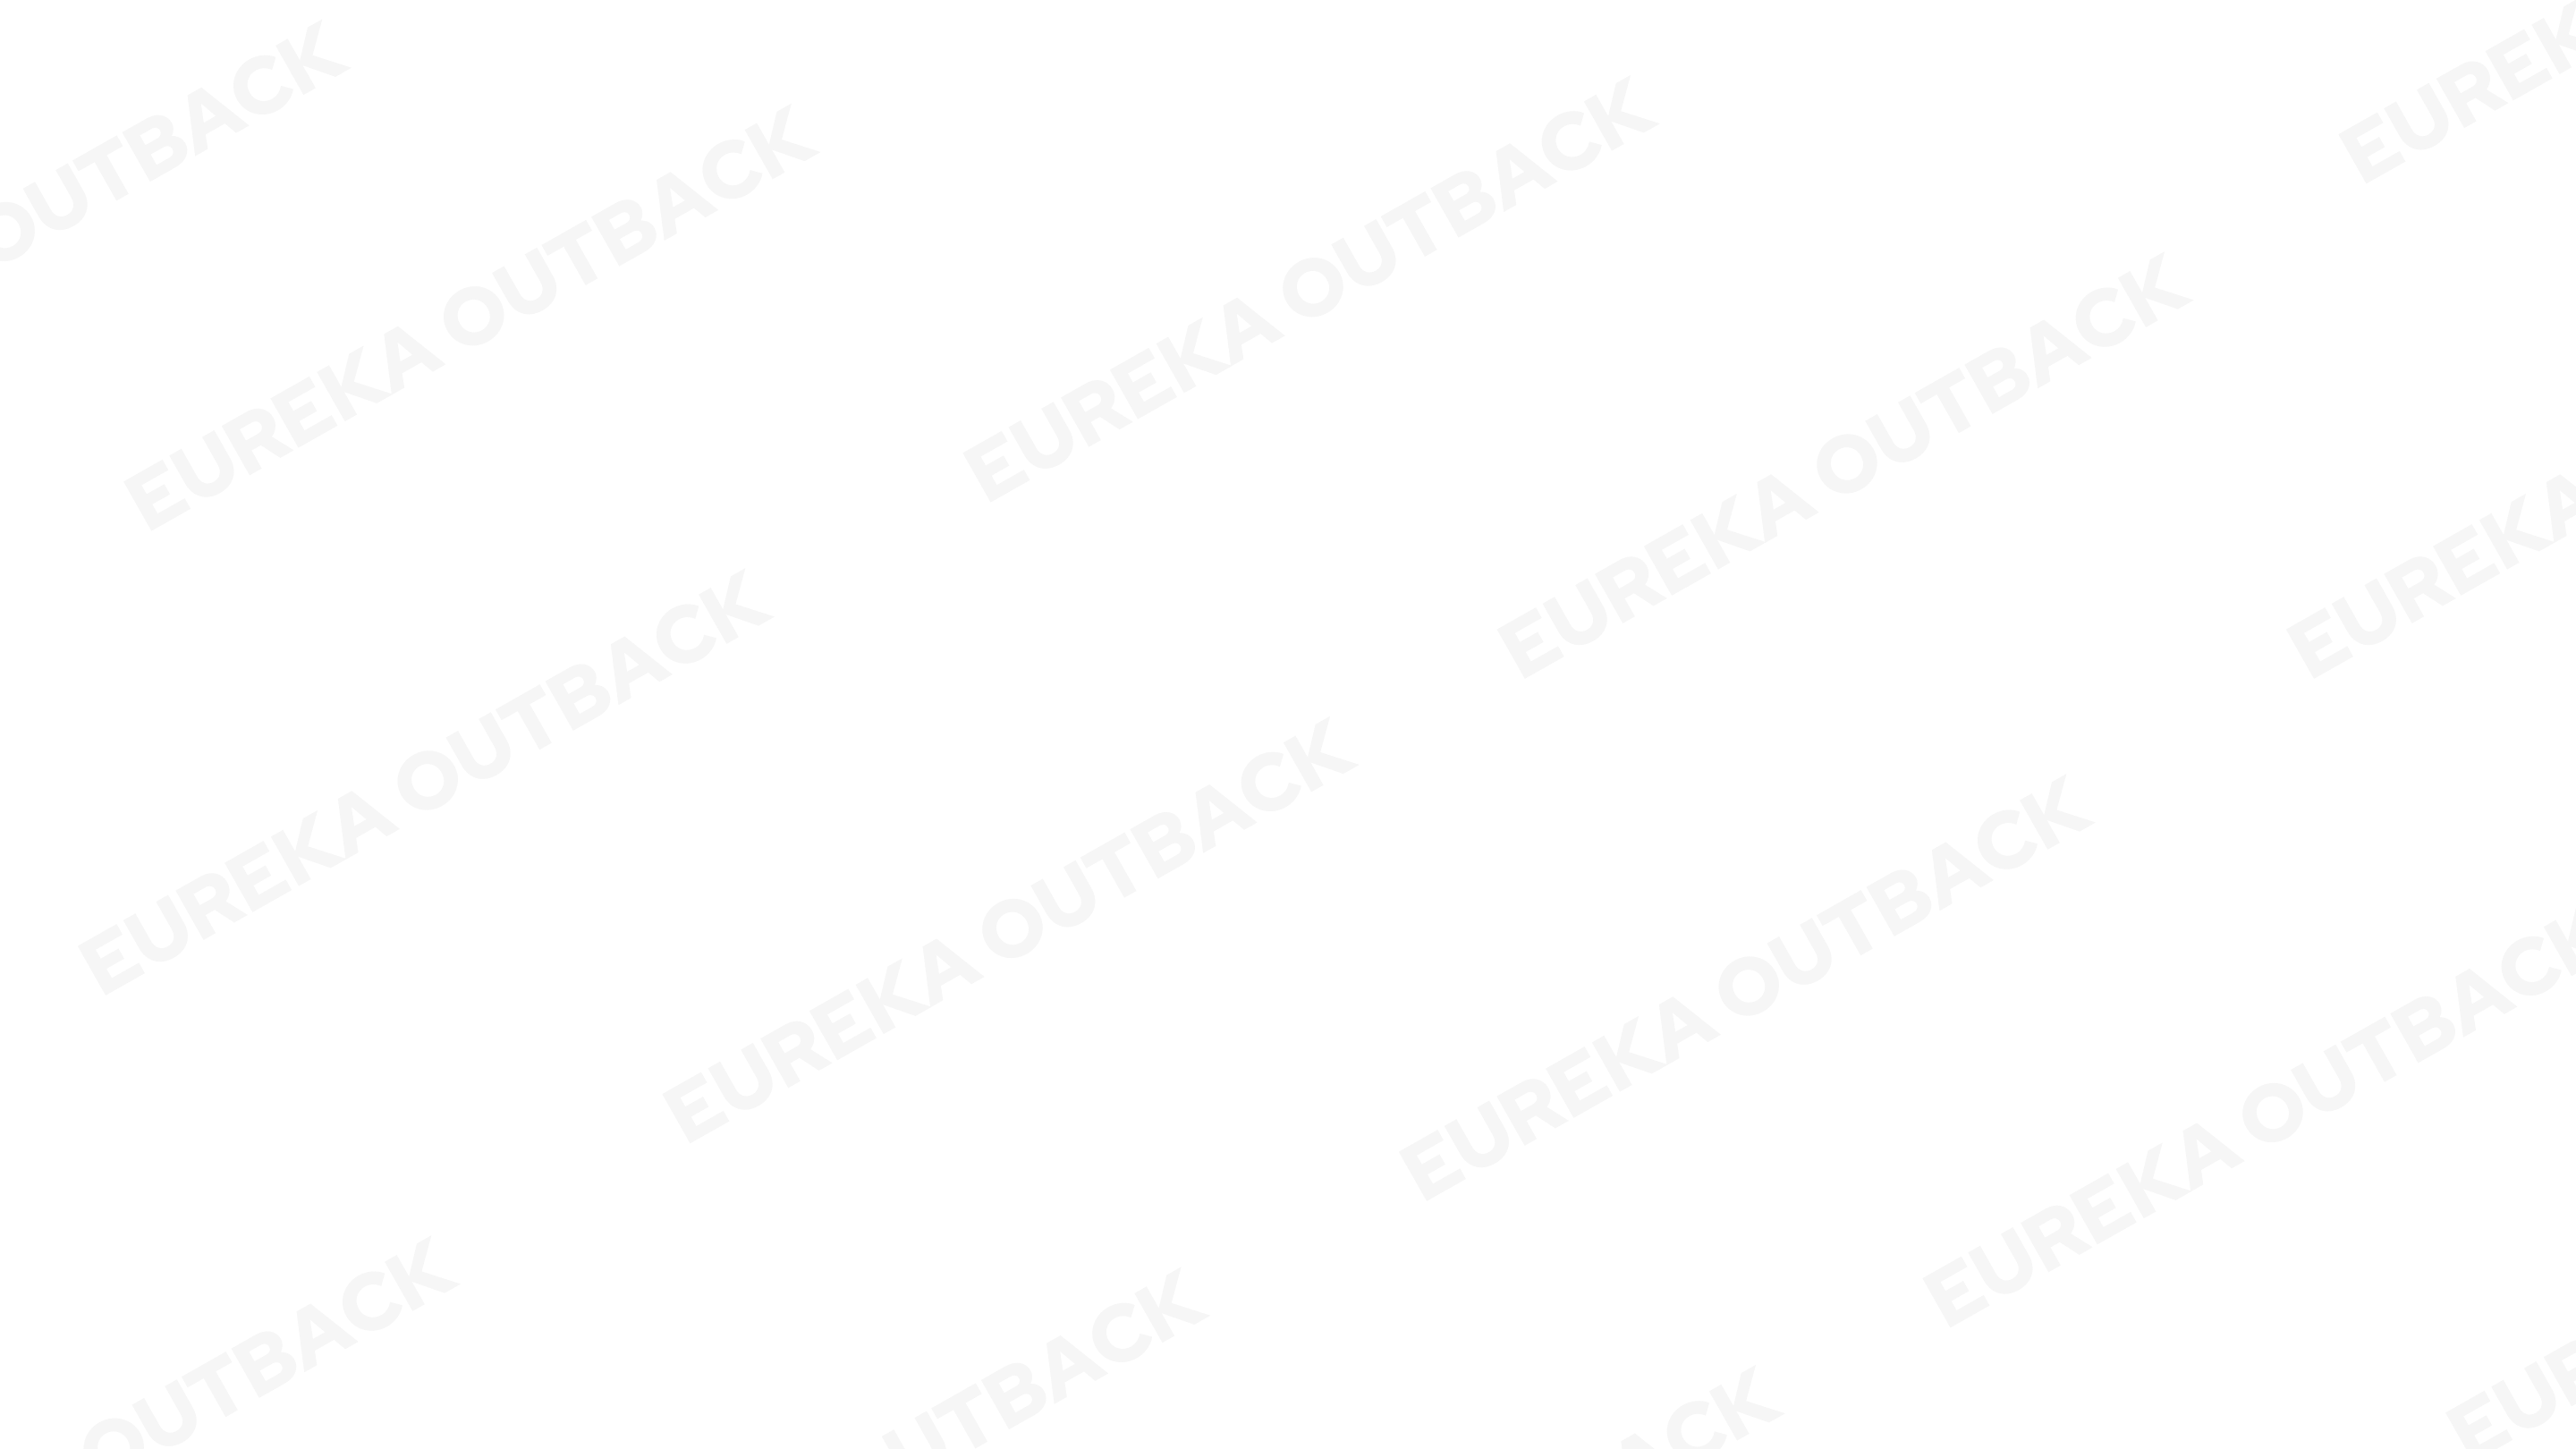 eureka outback image watermarks.png